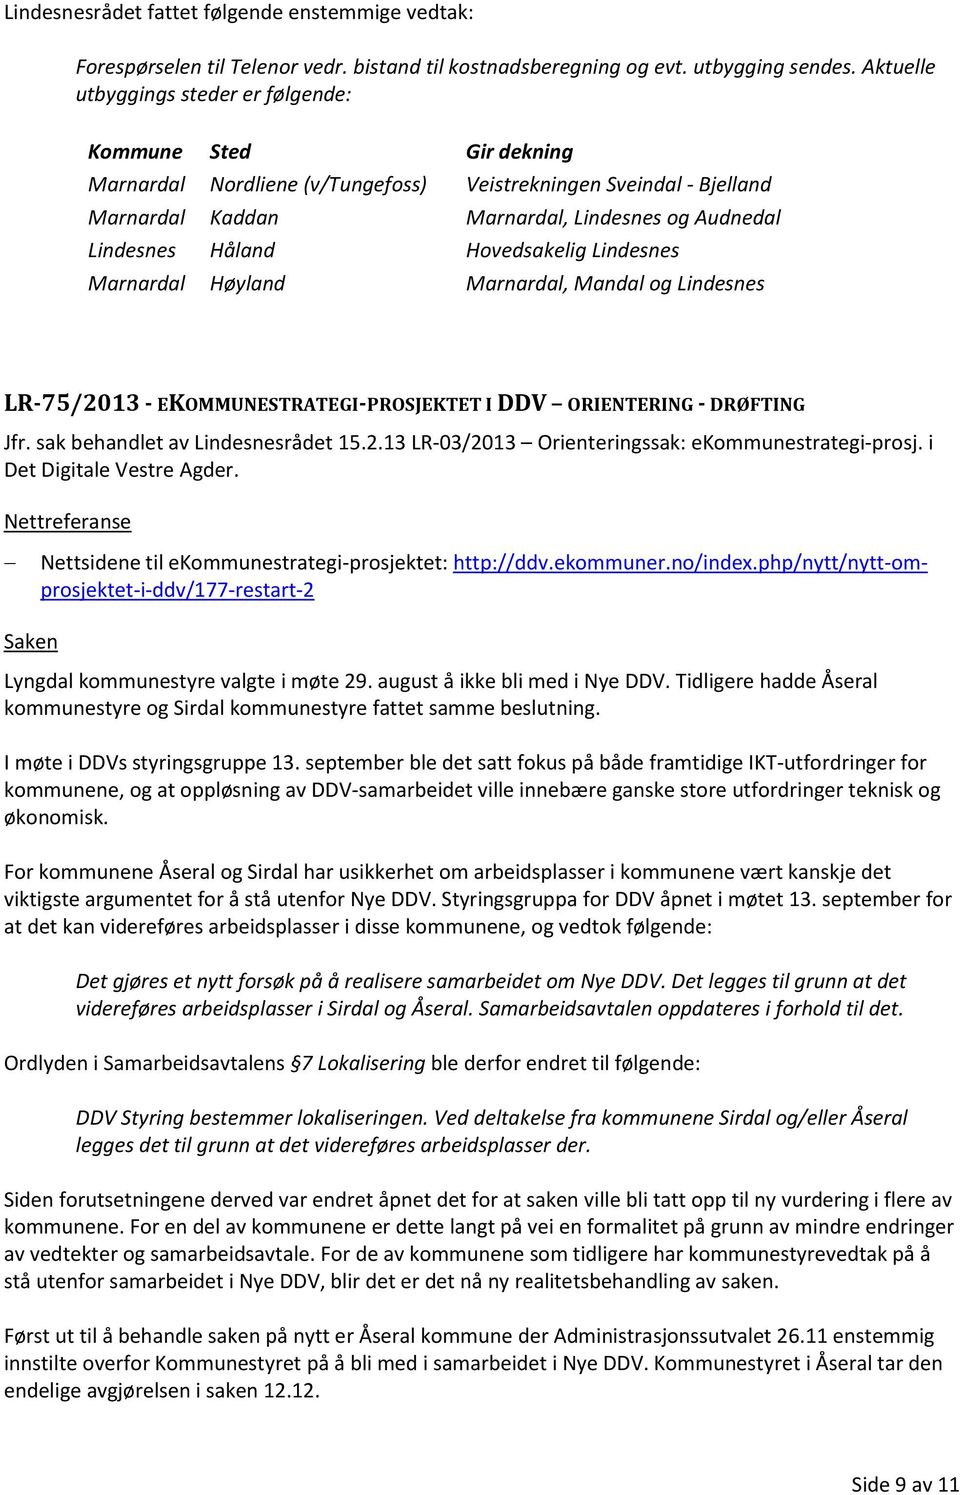 Håland Hovedsakelig Lindesnes Marnardal Høyland Marnardal, Mandal og Lindesnes LR-75/2013 - EKOMMUNESTRATEGI-PROSJEKTET I DDV ORIENTERING - DRØFTING Jfr. sak behandlet av Lindesnesrådet 15.2.13 LR-03/2013 Orienteringssak: ekommunestrategi-prosj.